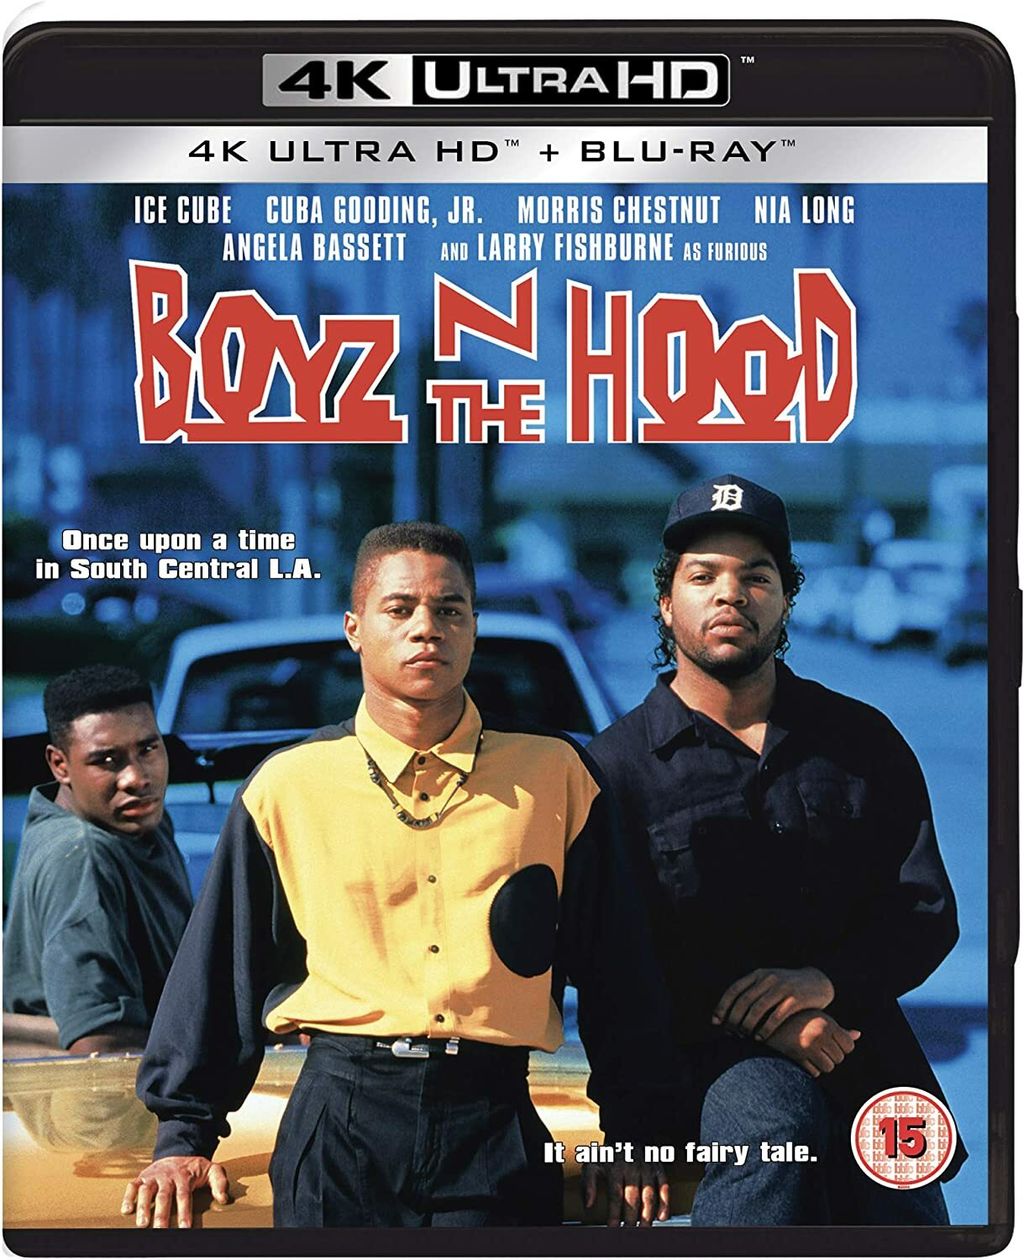 BOYZ N' THE HOOD [4K UHD] [Blu-ray] SLIPCASE 2-discs.jpg